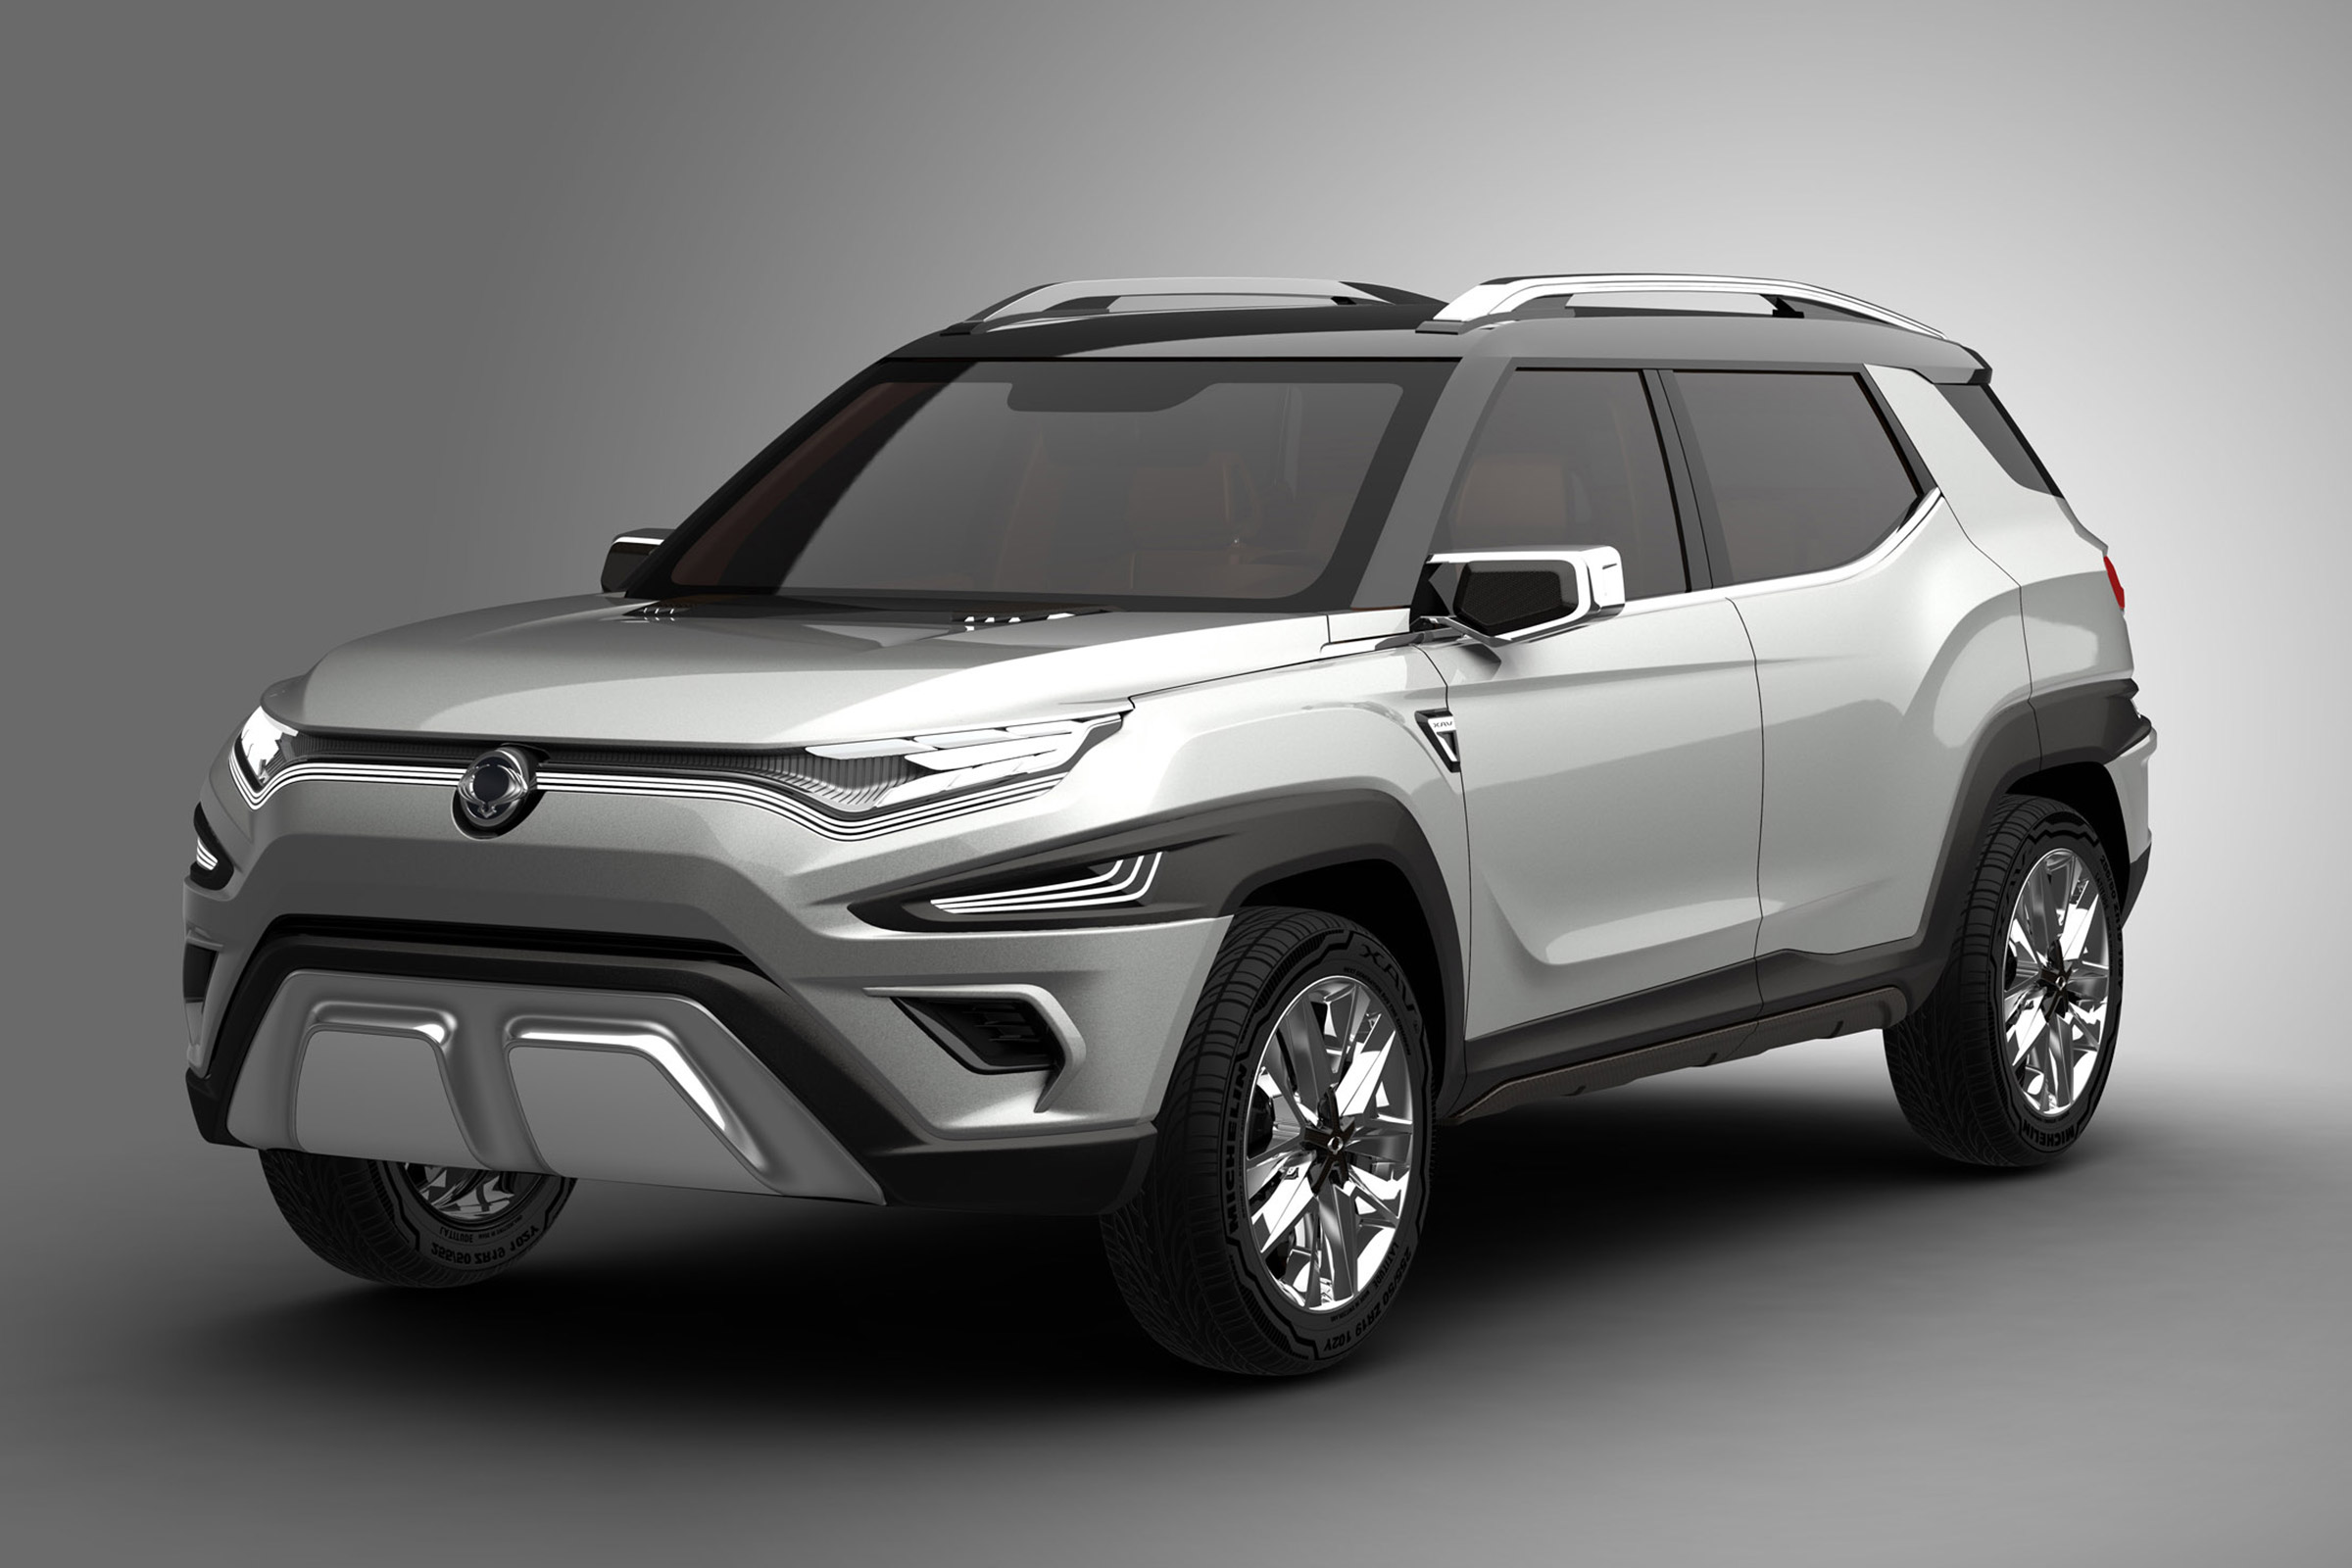 SsangYong XAVL concept previews 7seat SUV in Geneva